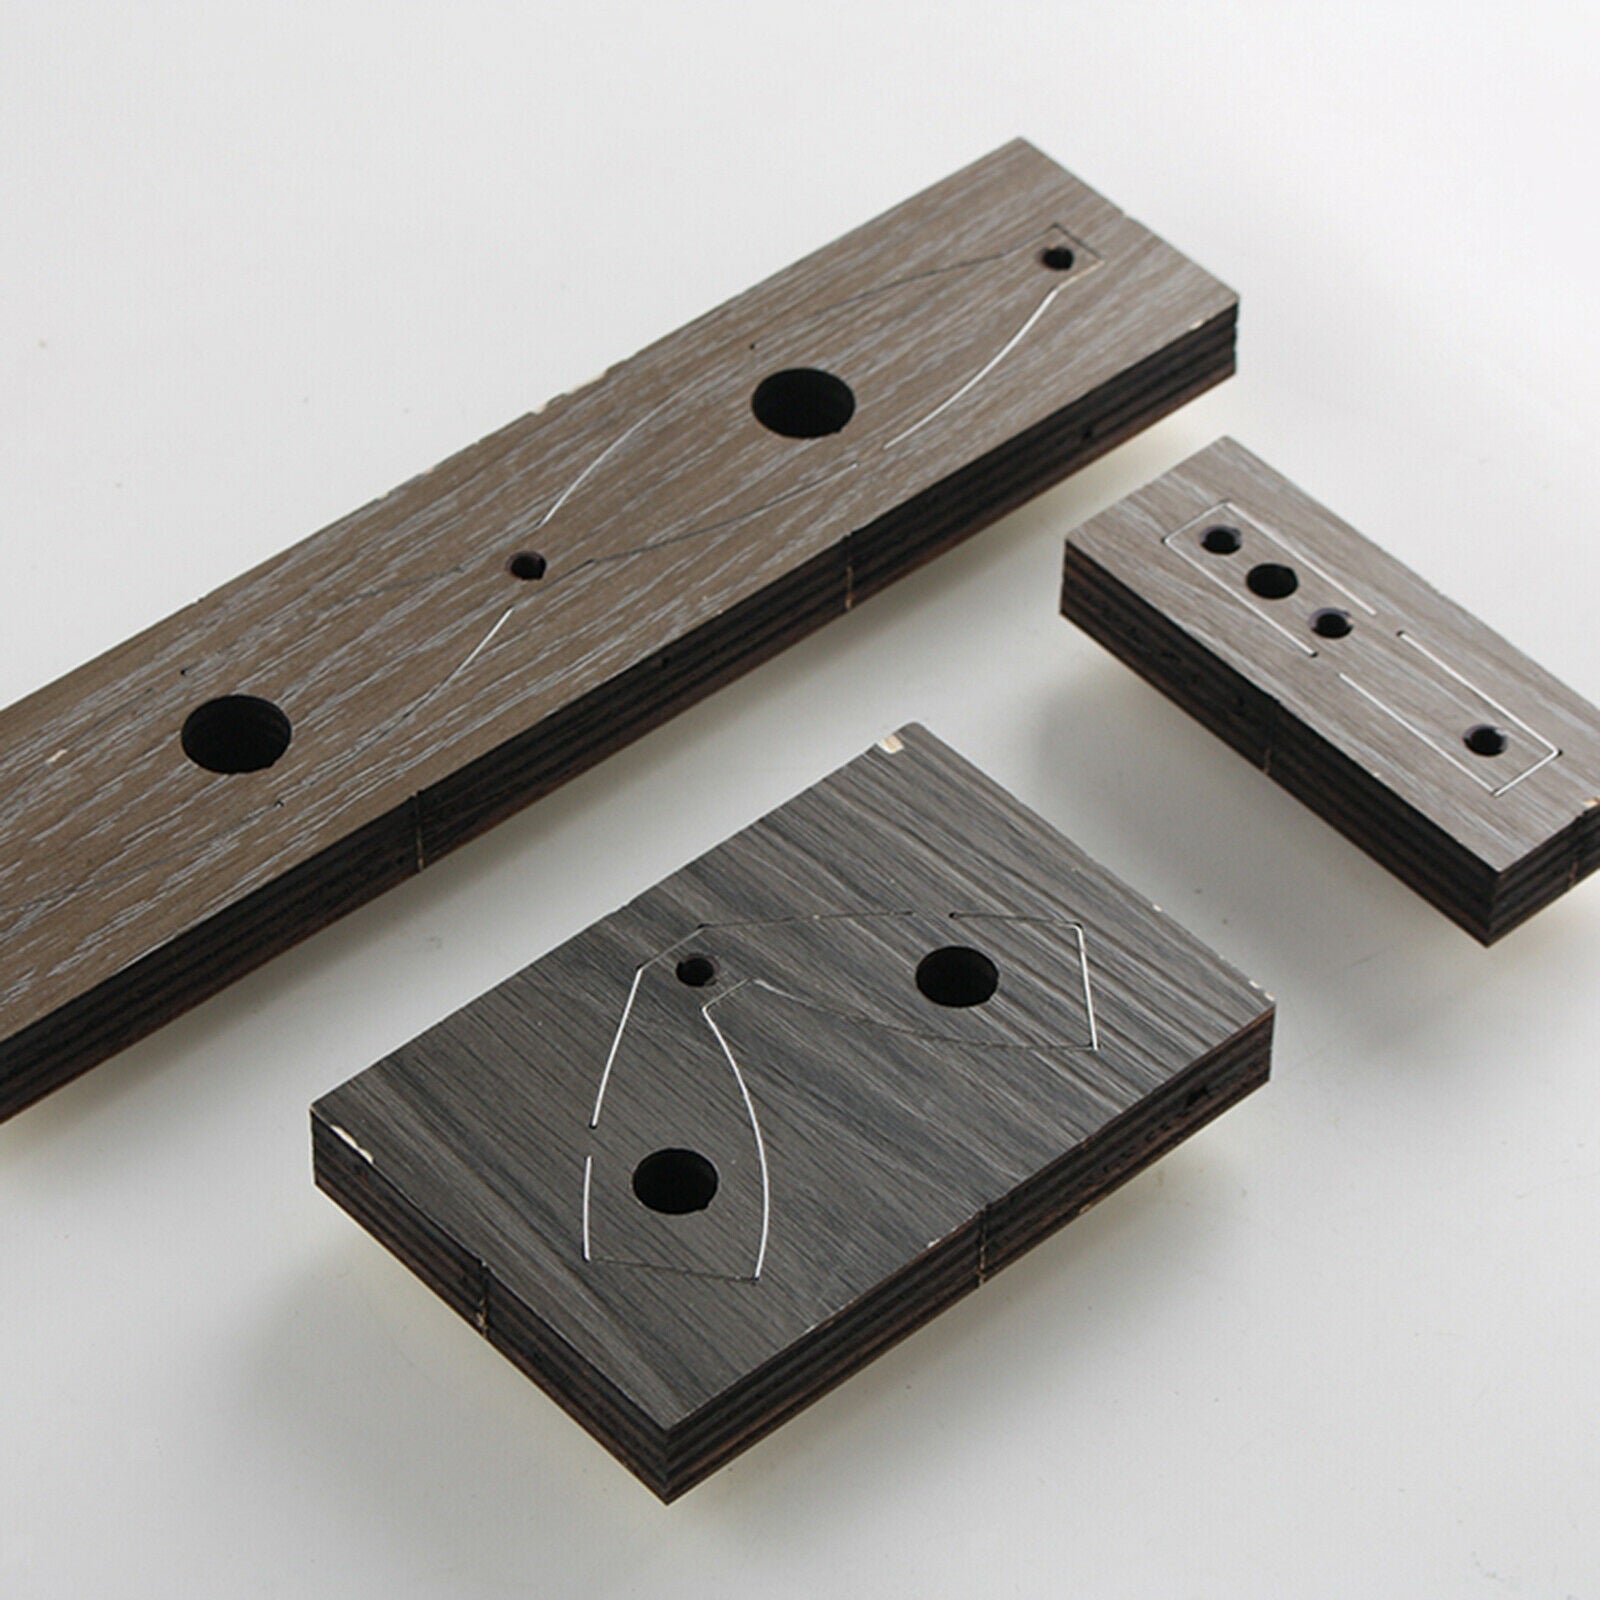 Steel Cutting Dies Leather Cutting Wood Shape Template DIY Tool